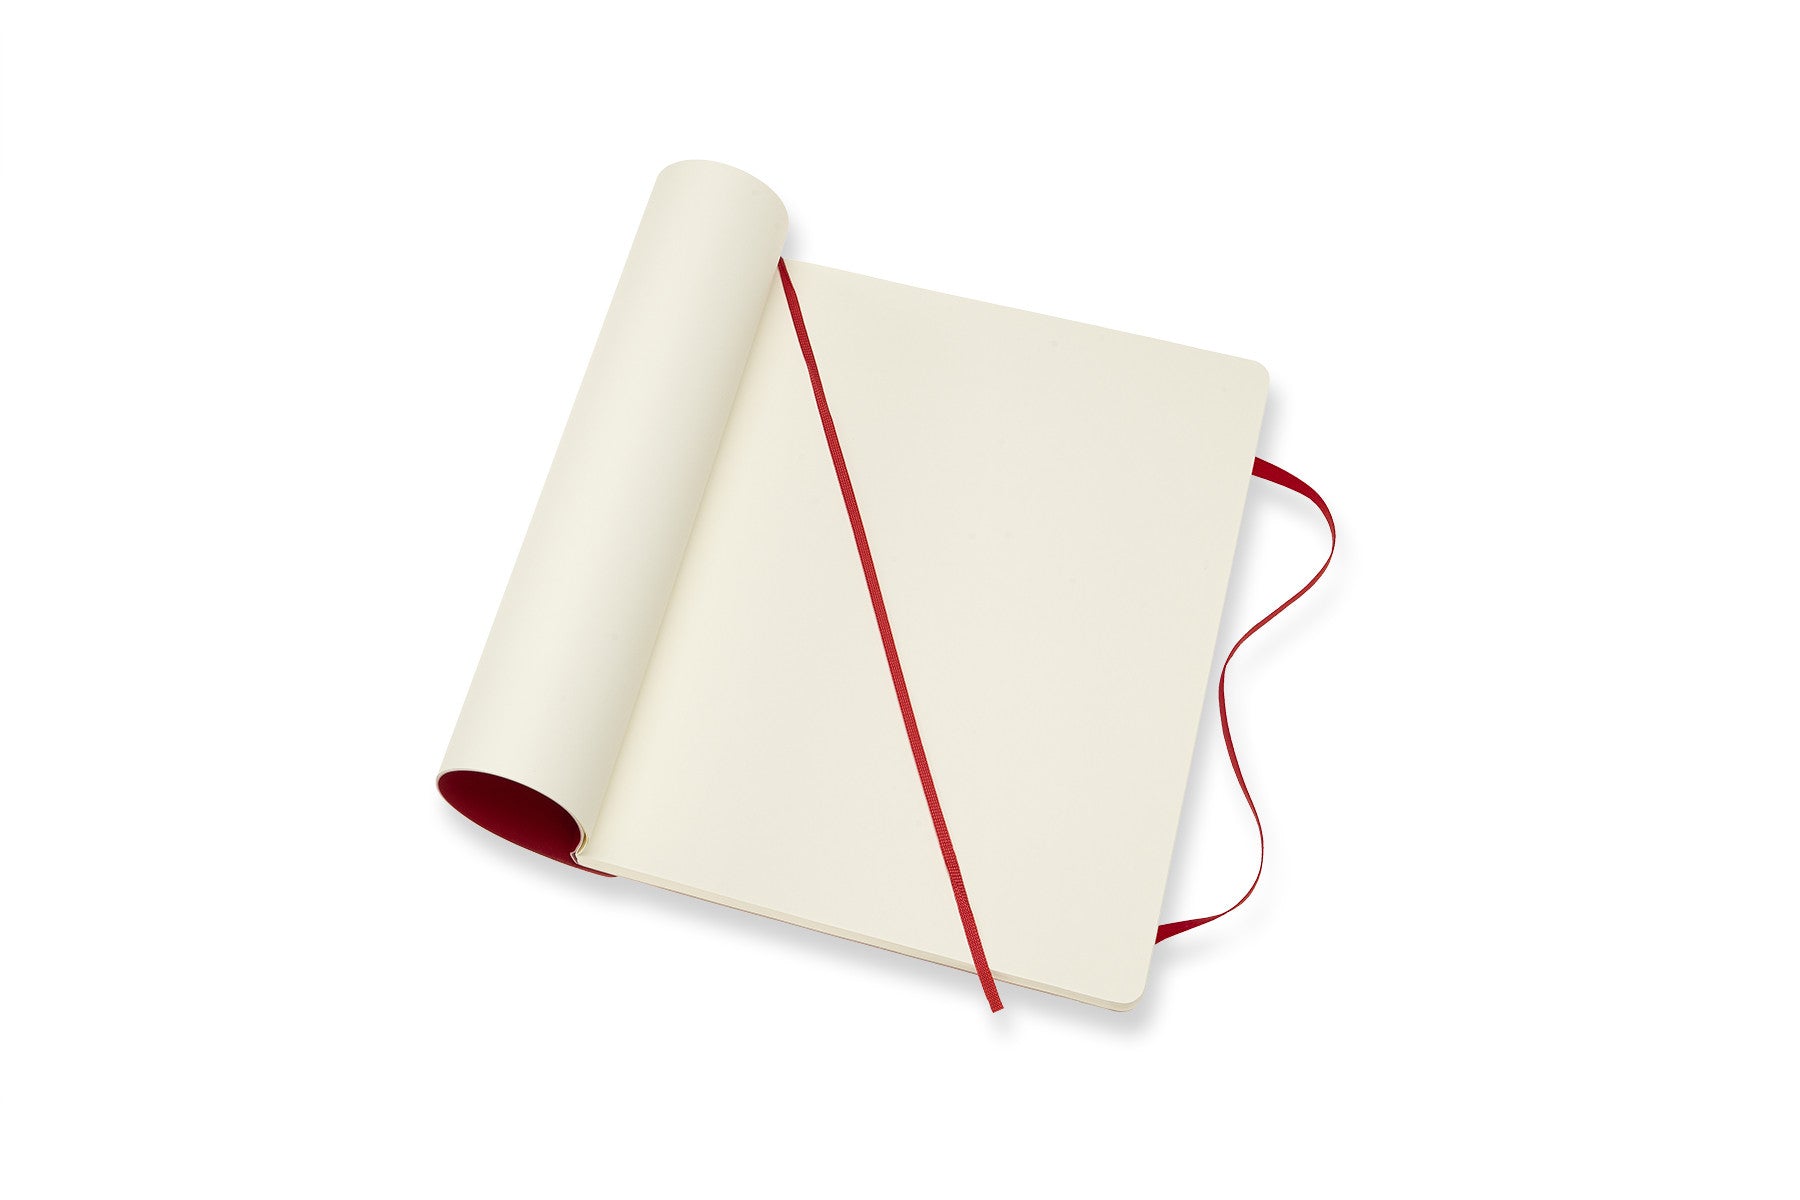 Moleskine notitieboekje softcover x-large effen rood